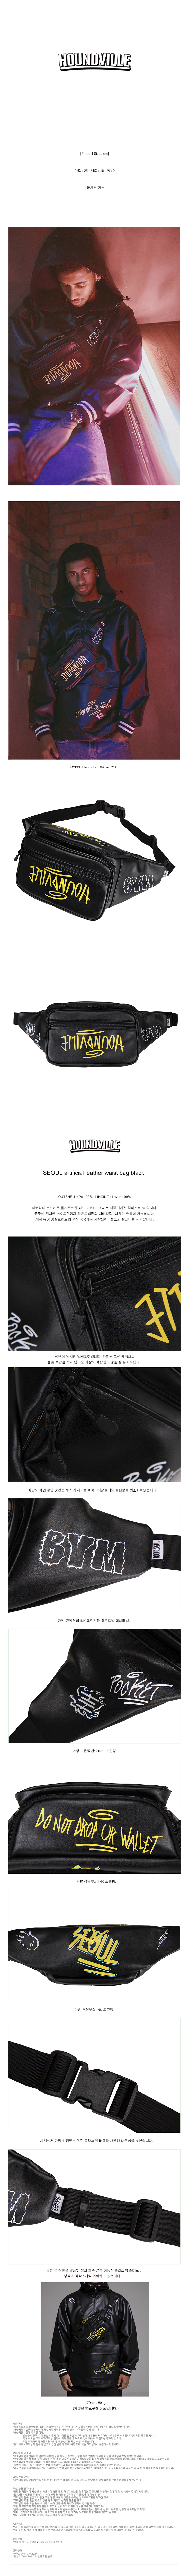 SEOUL artificial leather waist bag black.jpg